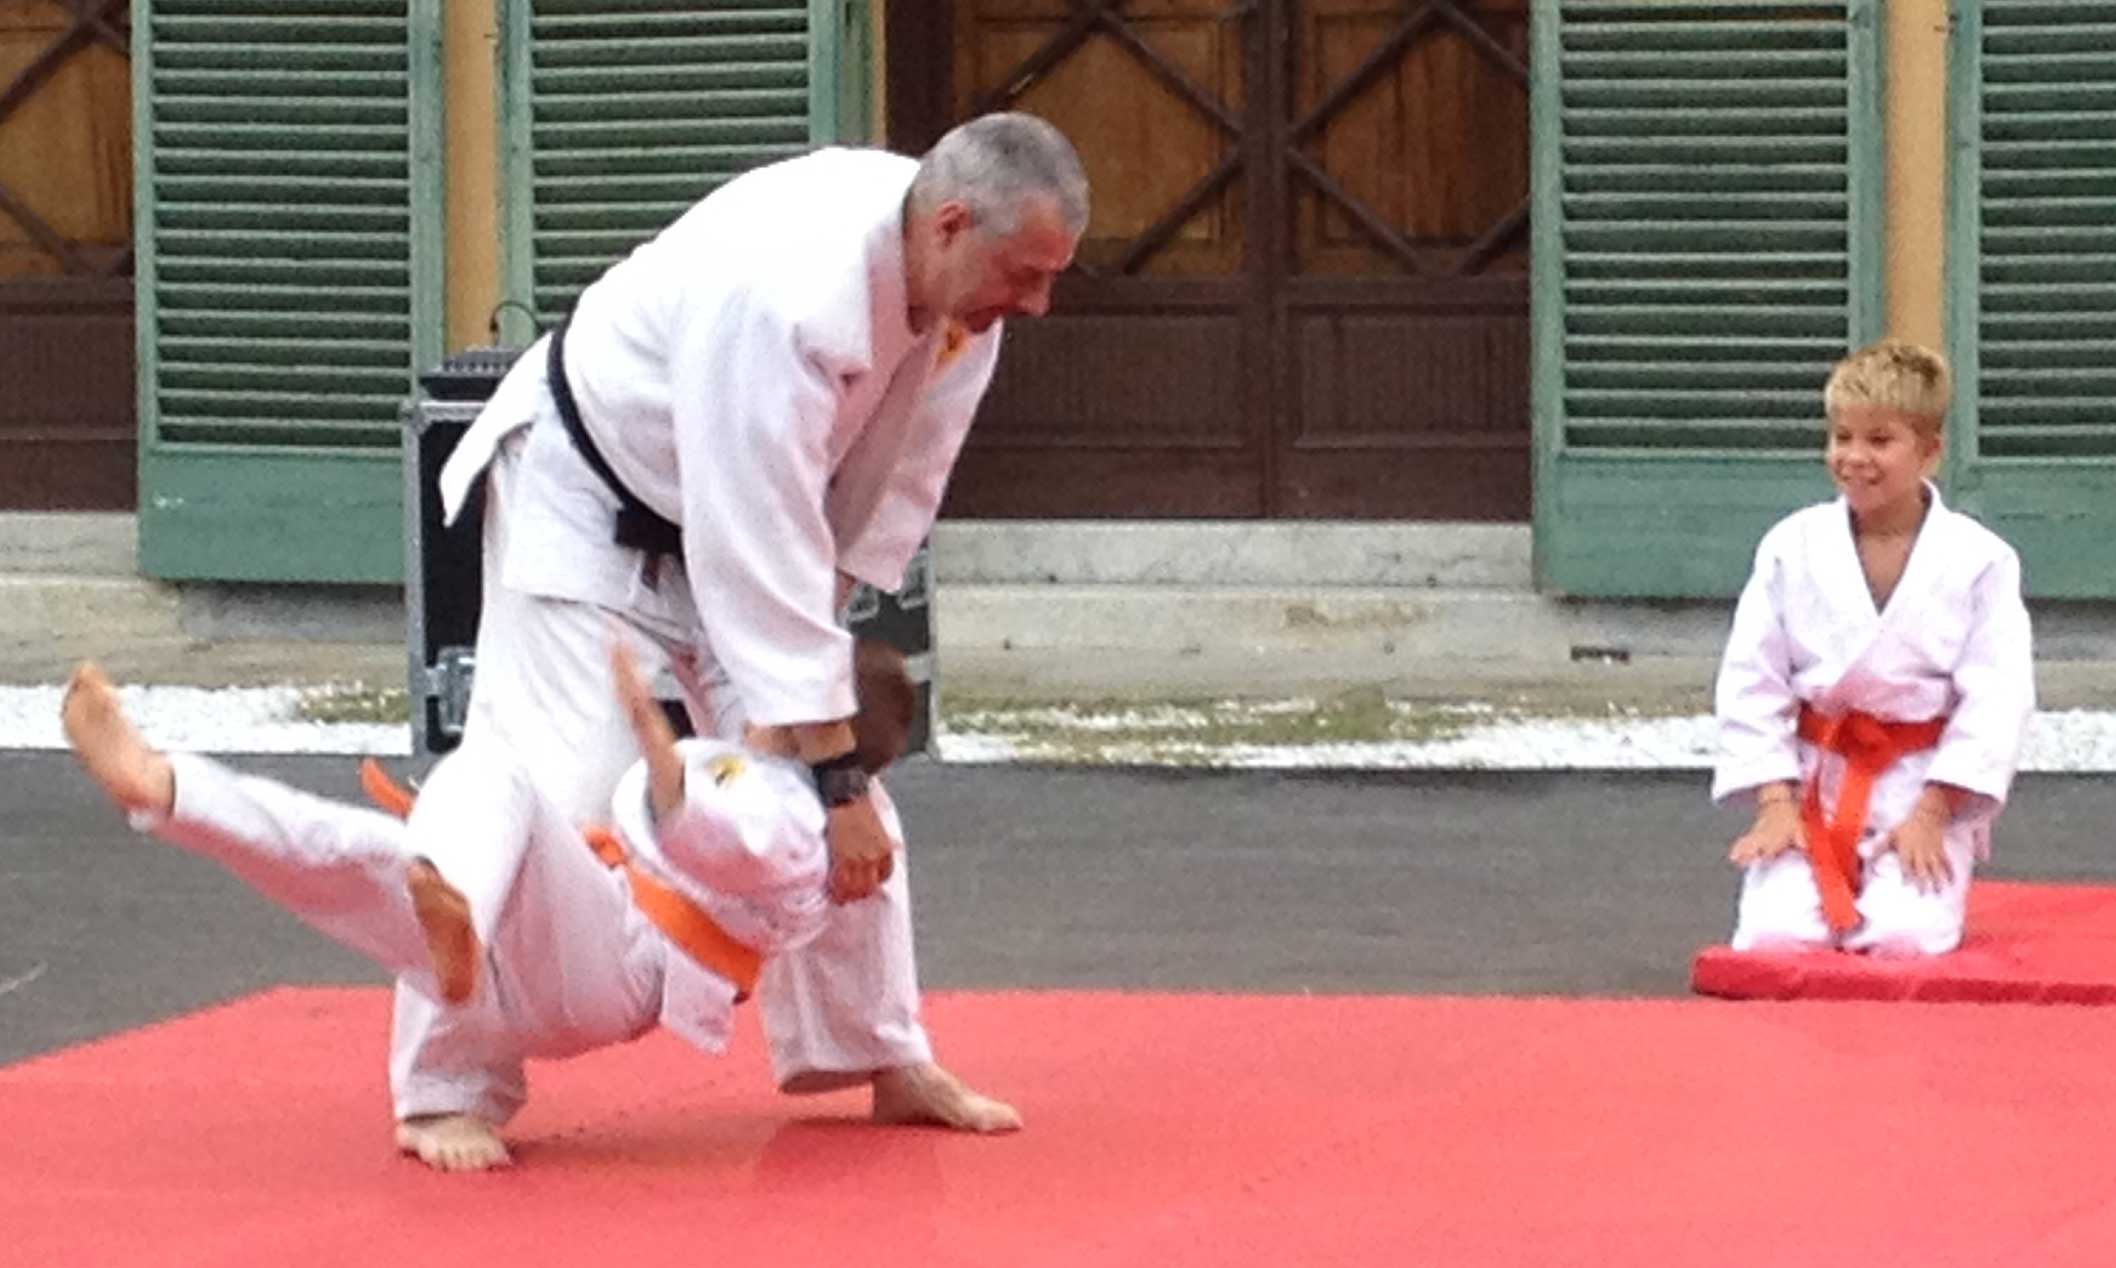 Judo@Budokan